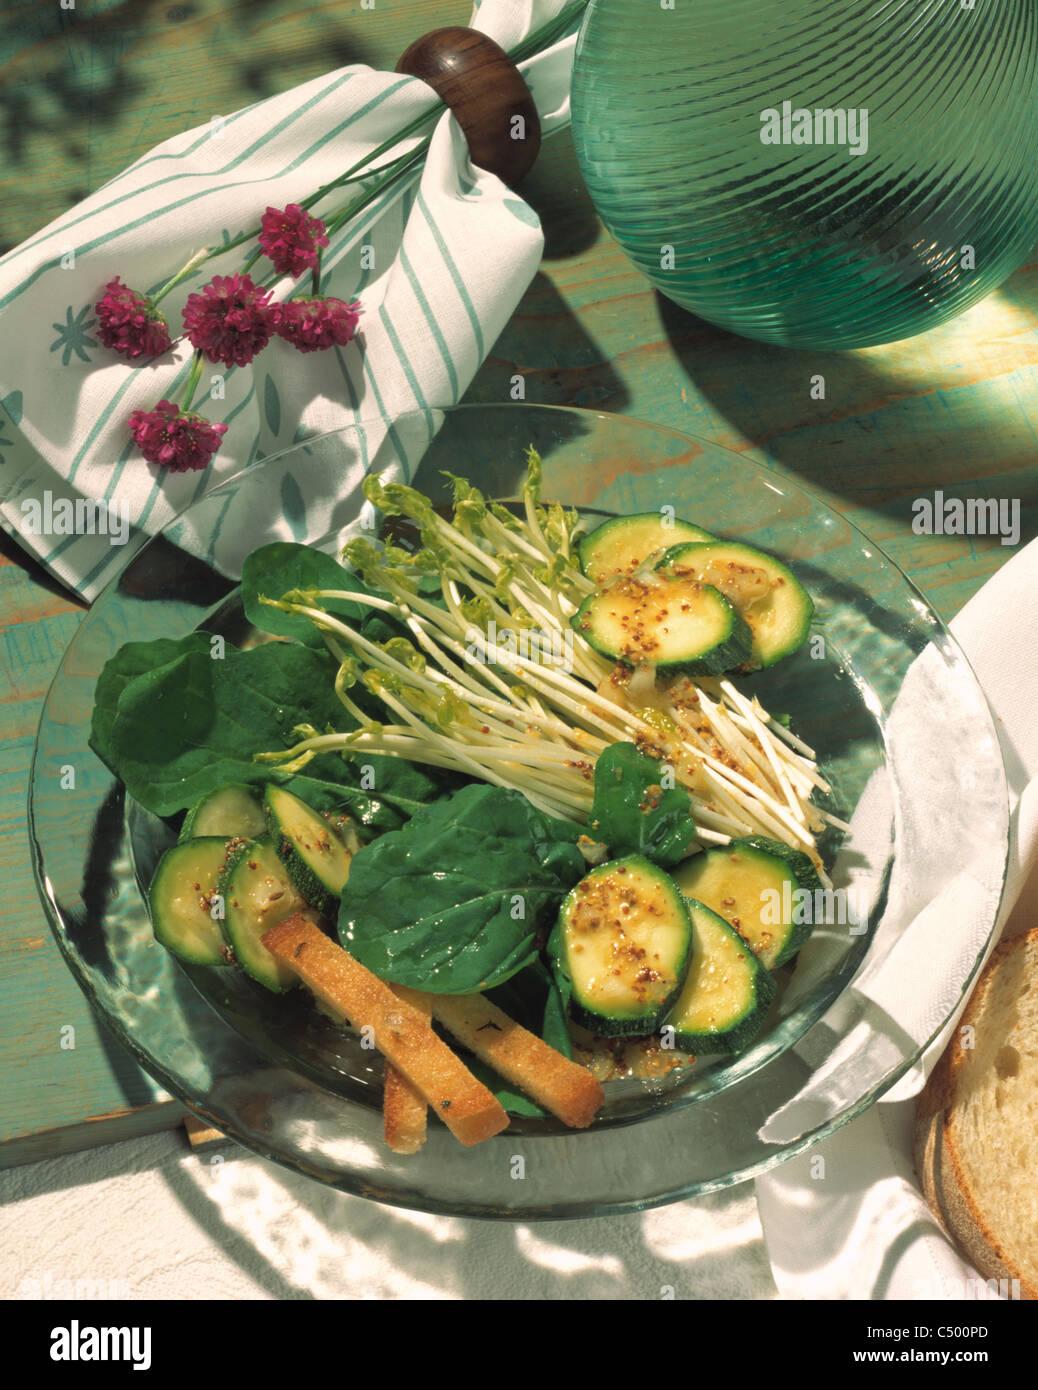 Courgette - rocket - salad Stock Photo